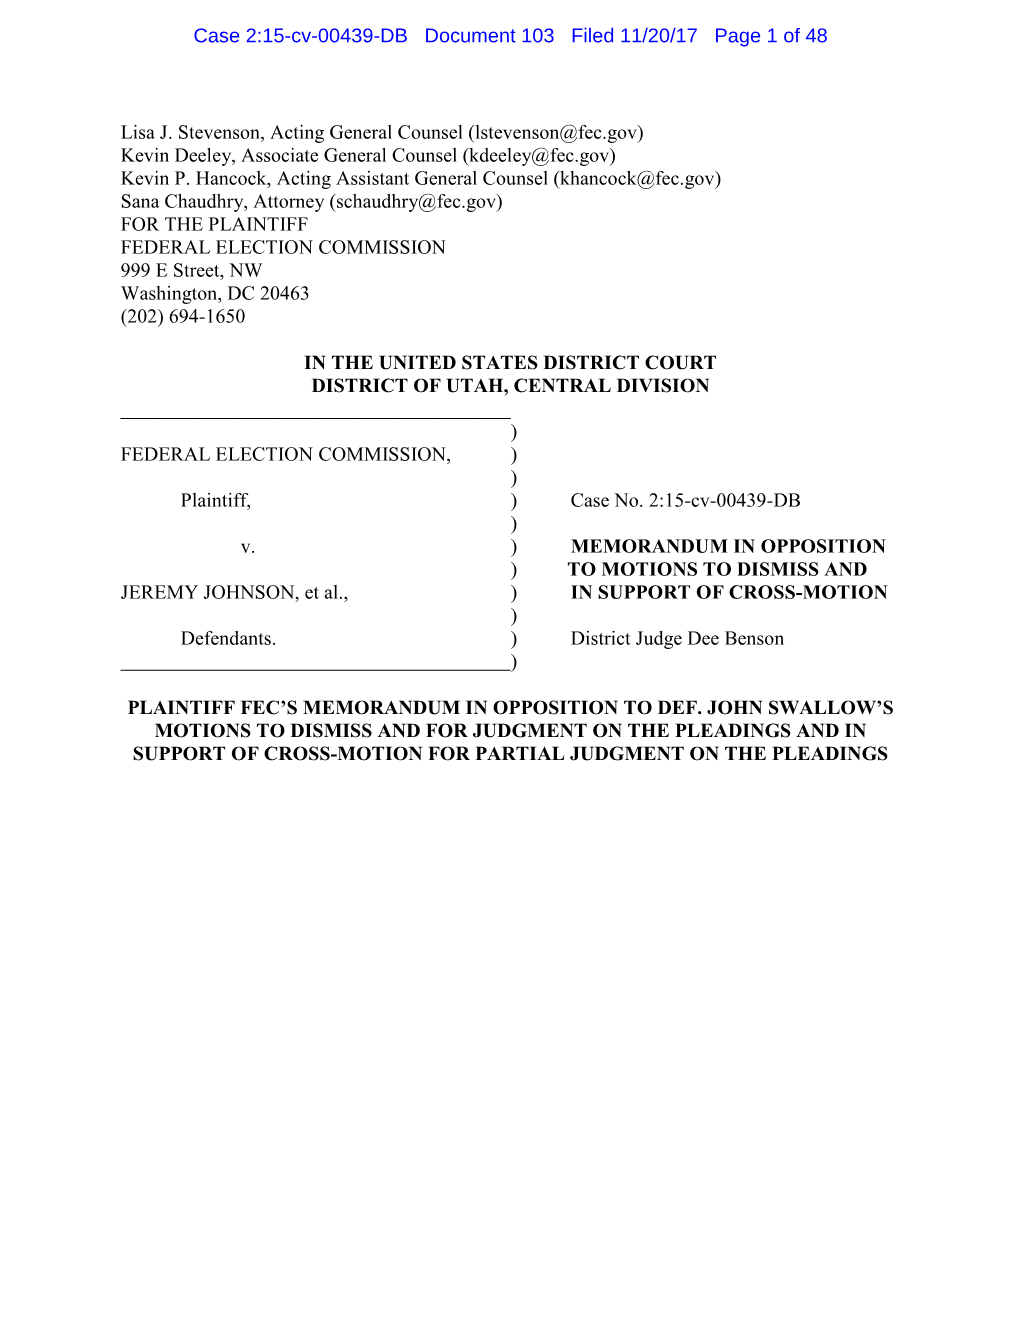 Plaintiff FEC's Memorandum in Opposition to Def. John Swallow's